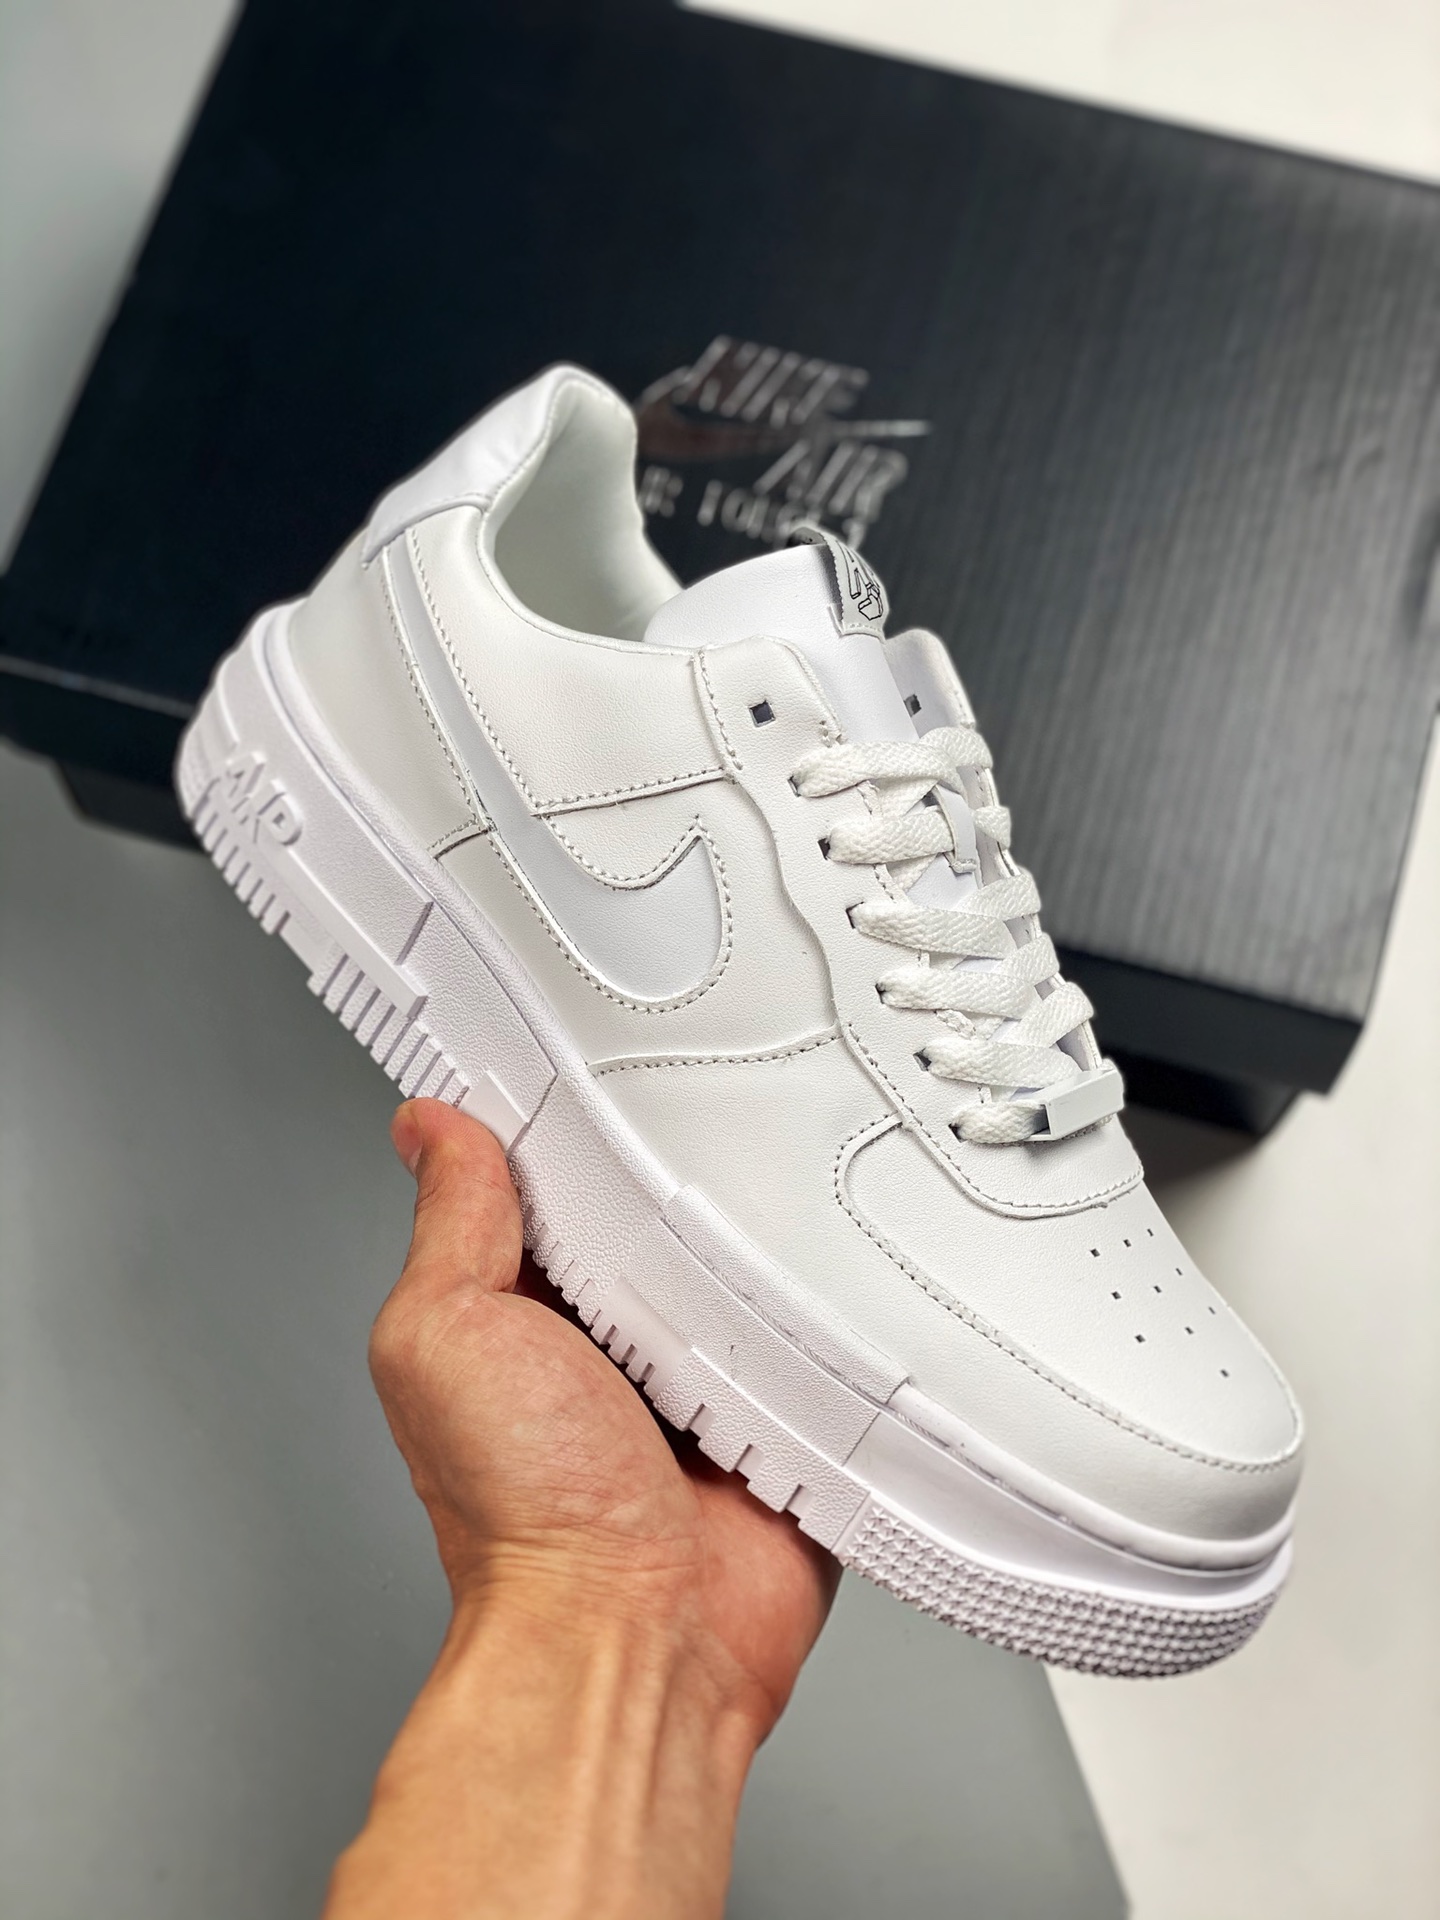 Nike Air Force 1 Pixel “Triple White” For Sale – Sneaker Hello